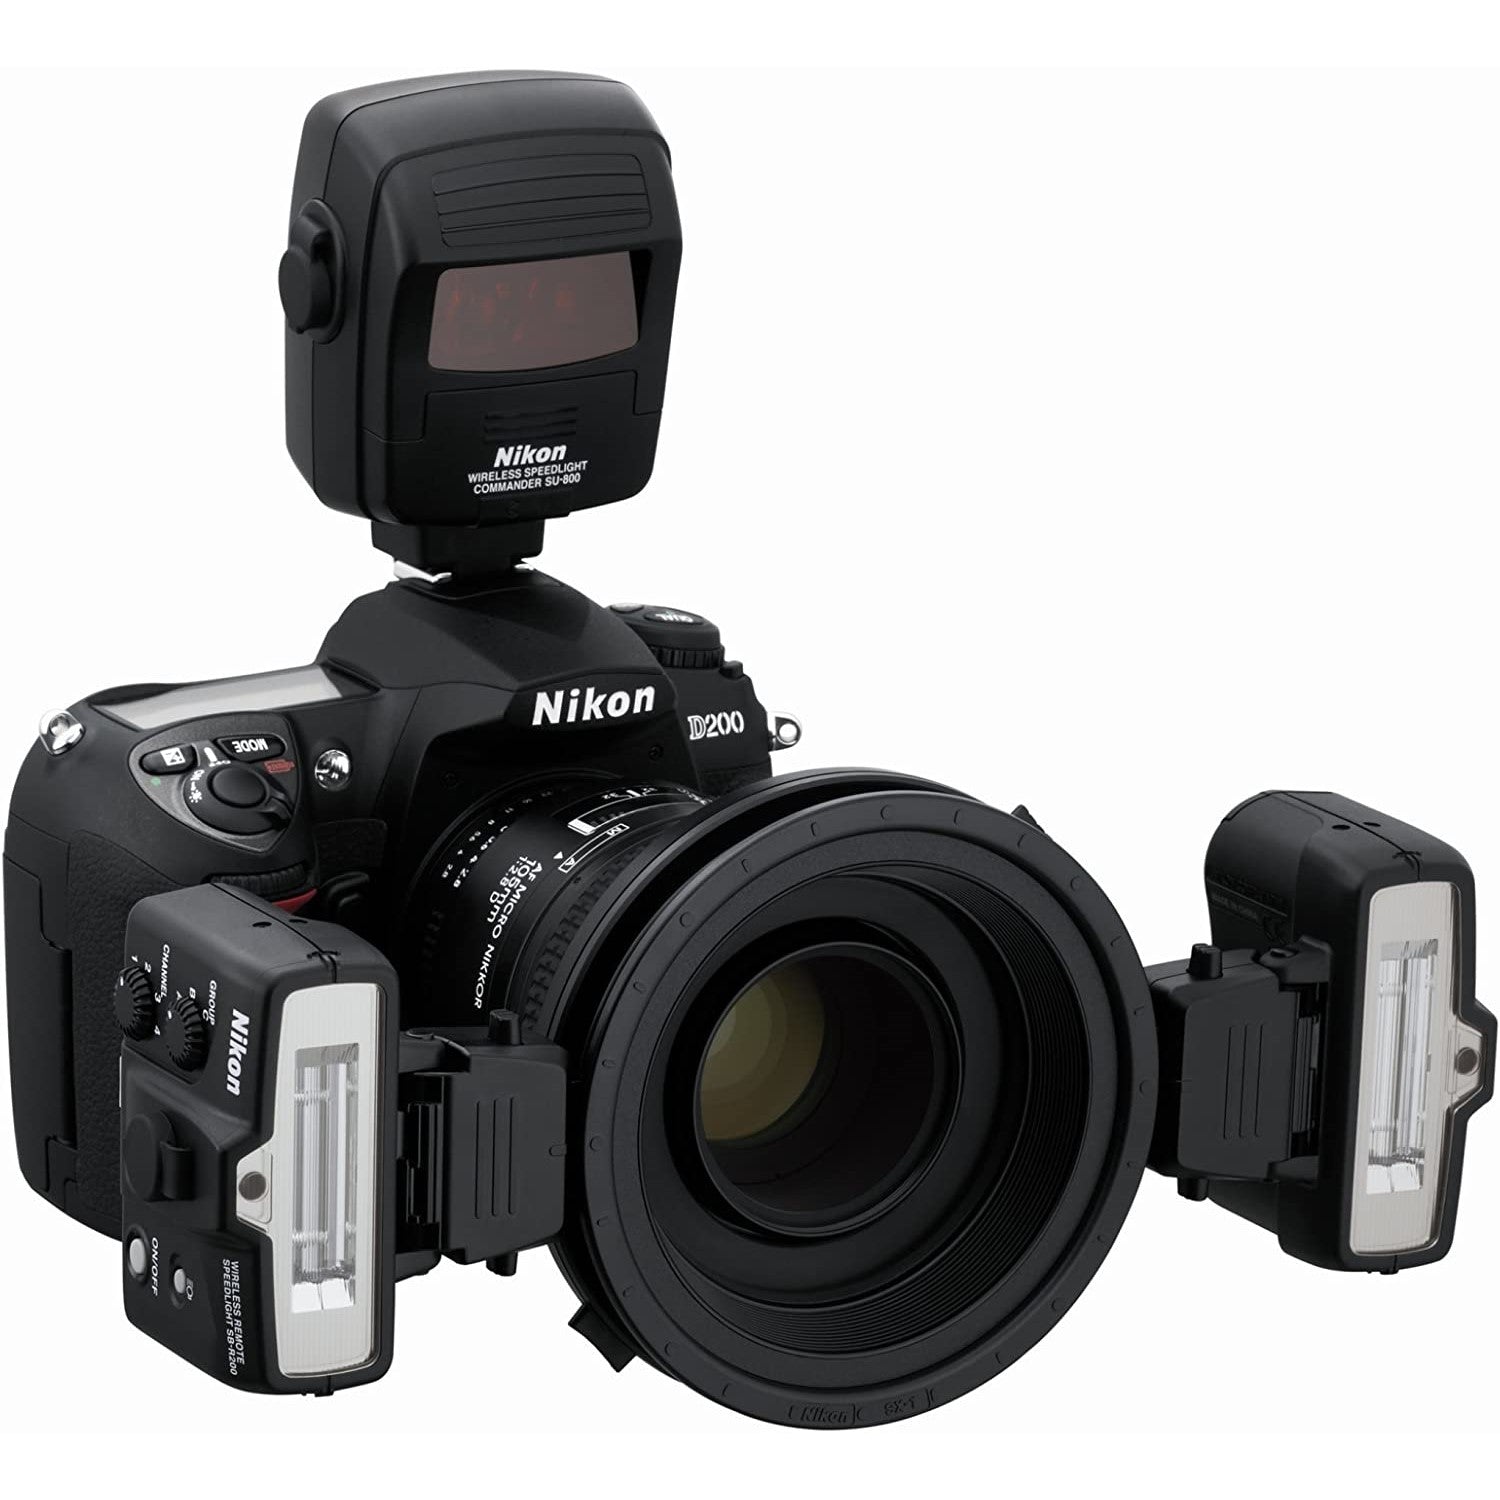 Nikon R1C1 Wireless Close-Up Speedlight System Nikon